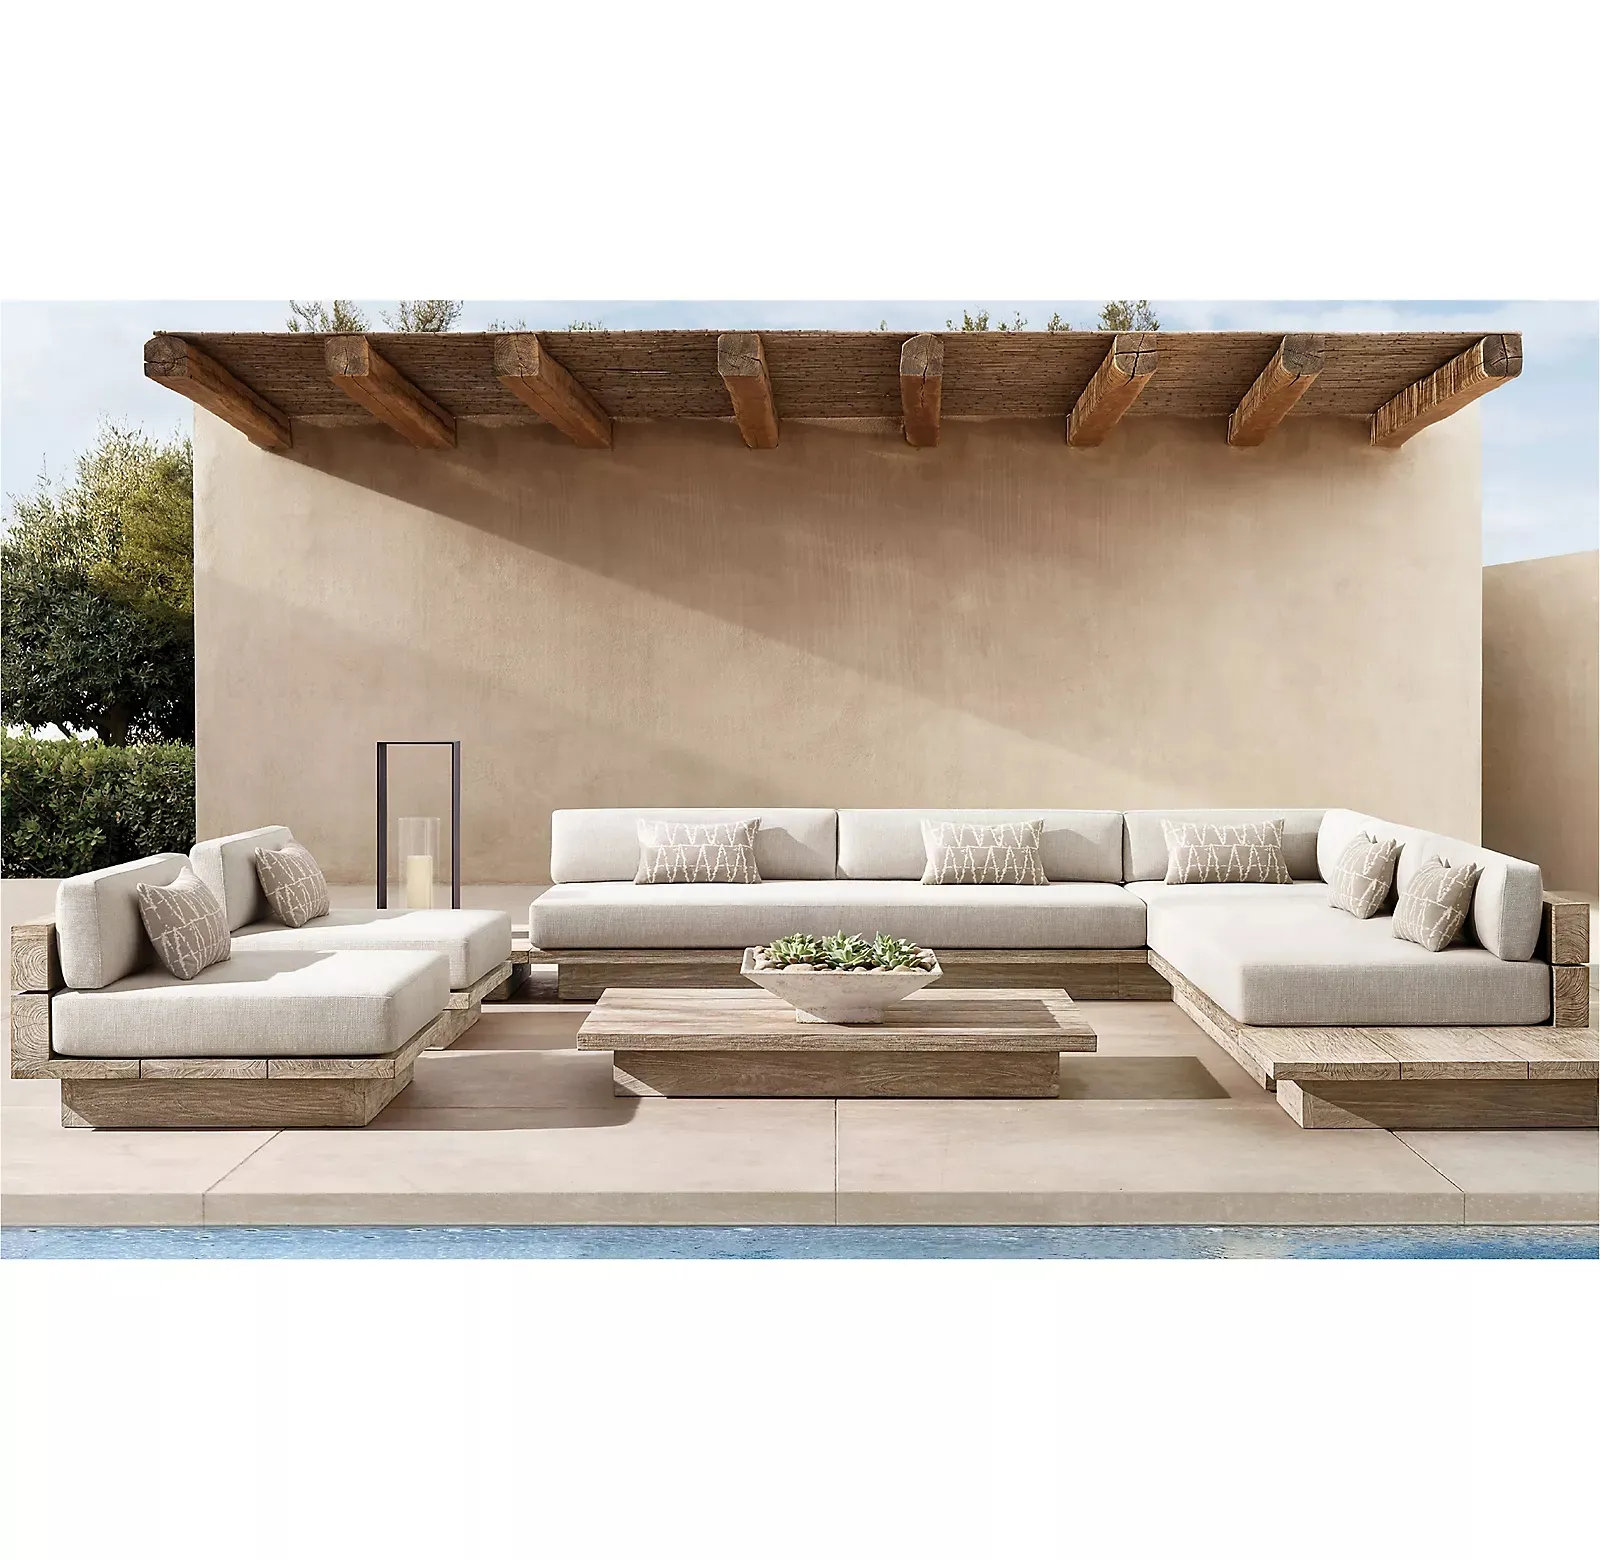 Professional manufacturer L shape modular sectional garden sofa modern teak wood patio outdoor furniture set